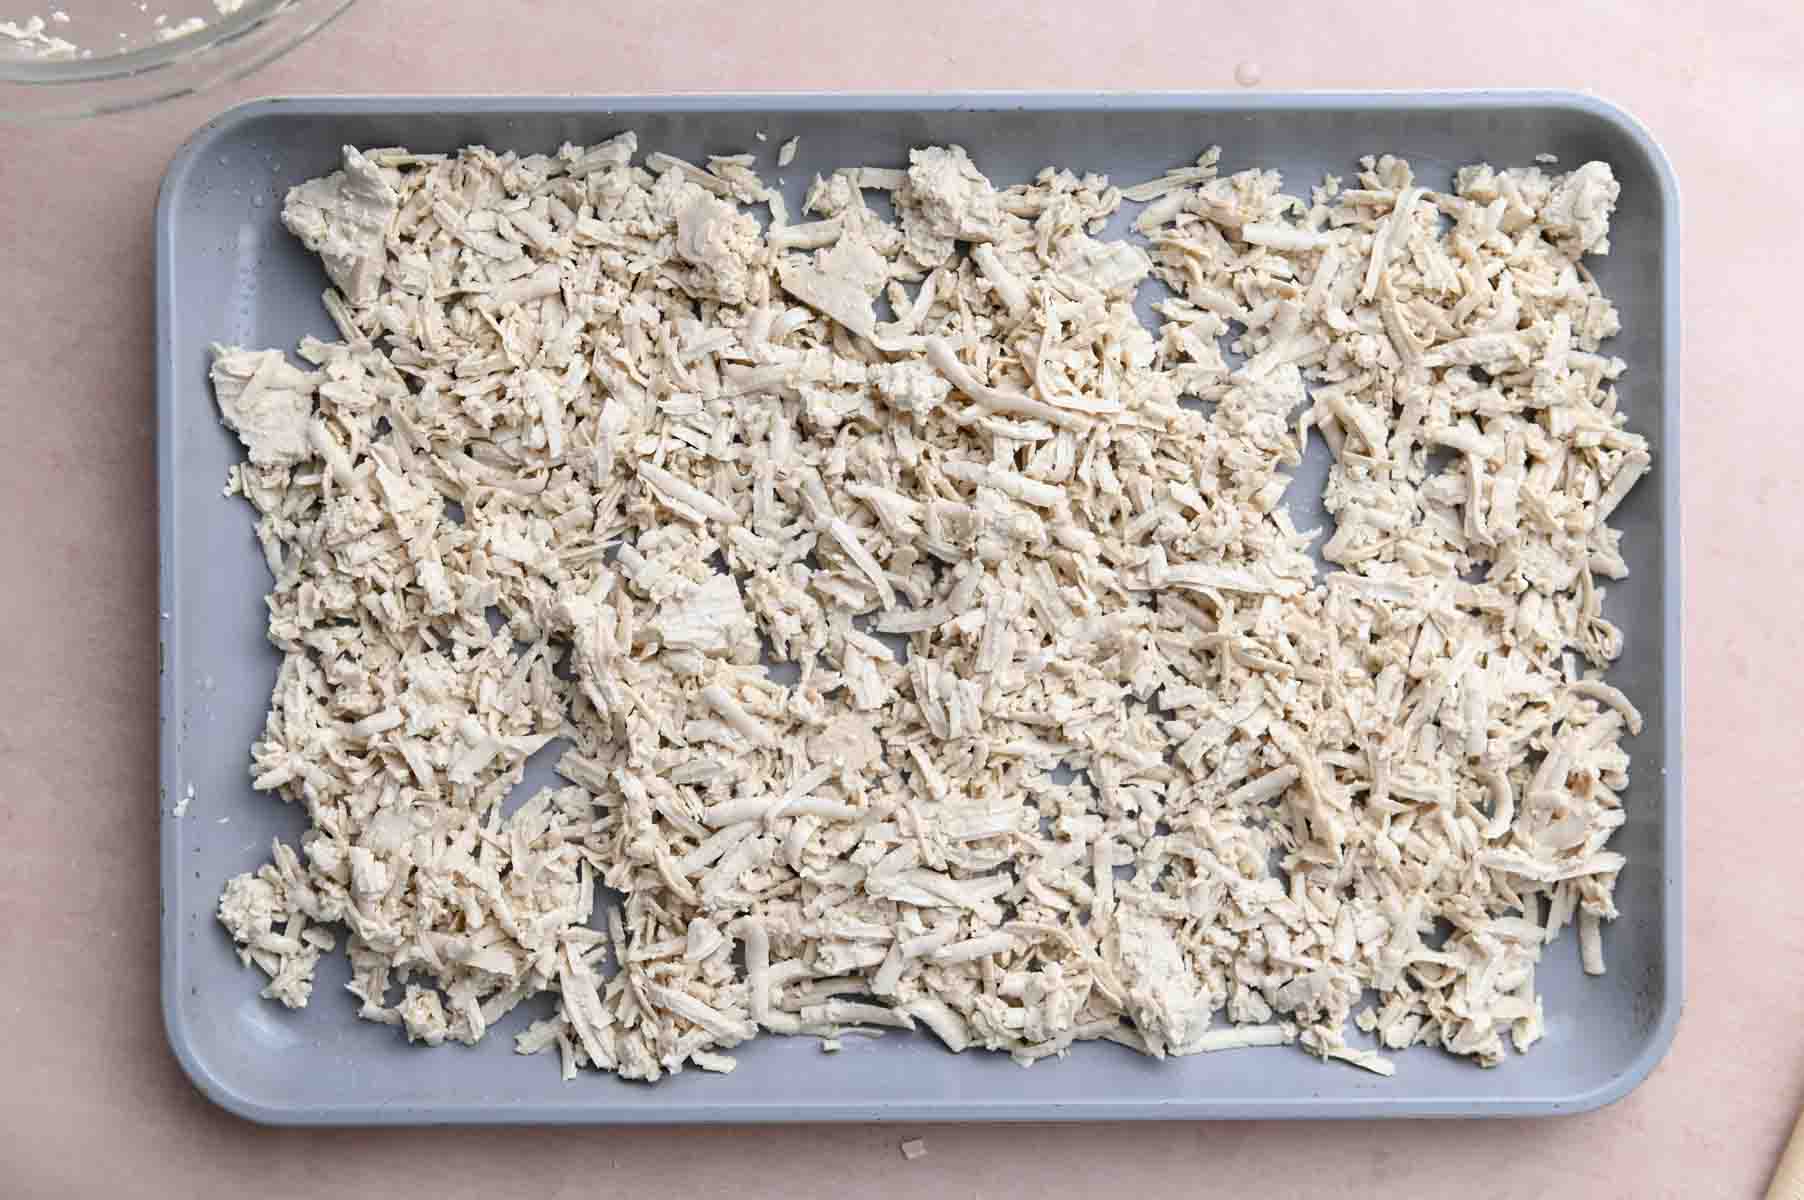 Shredded tofu on a baking sheet before baking.